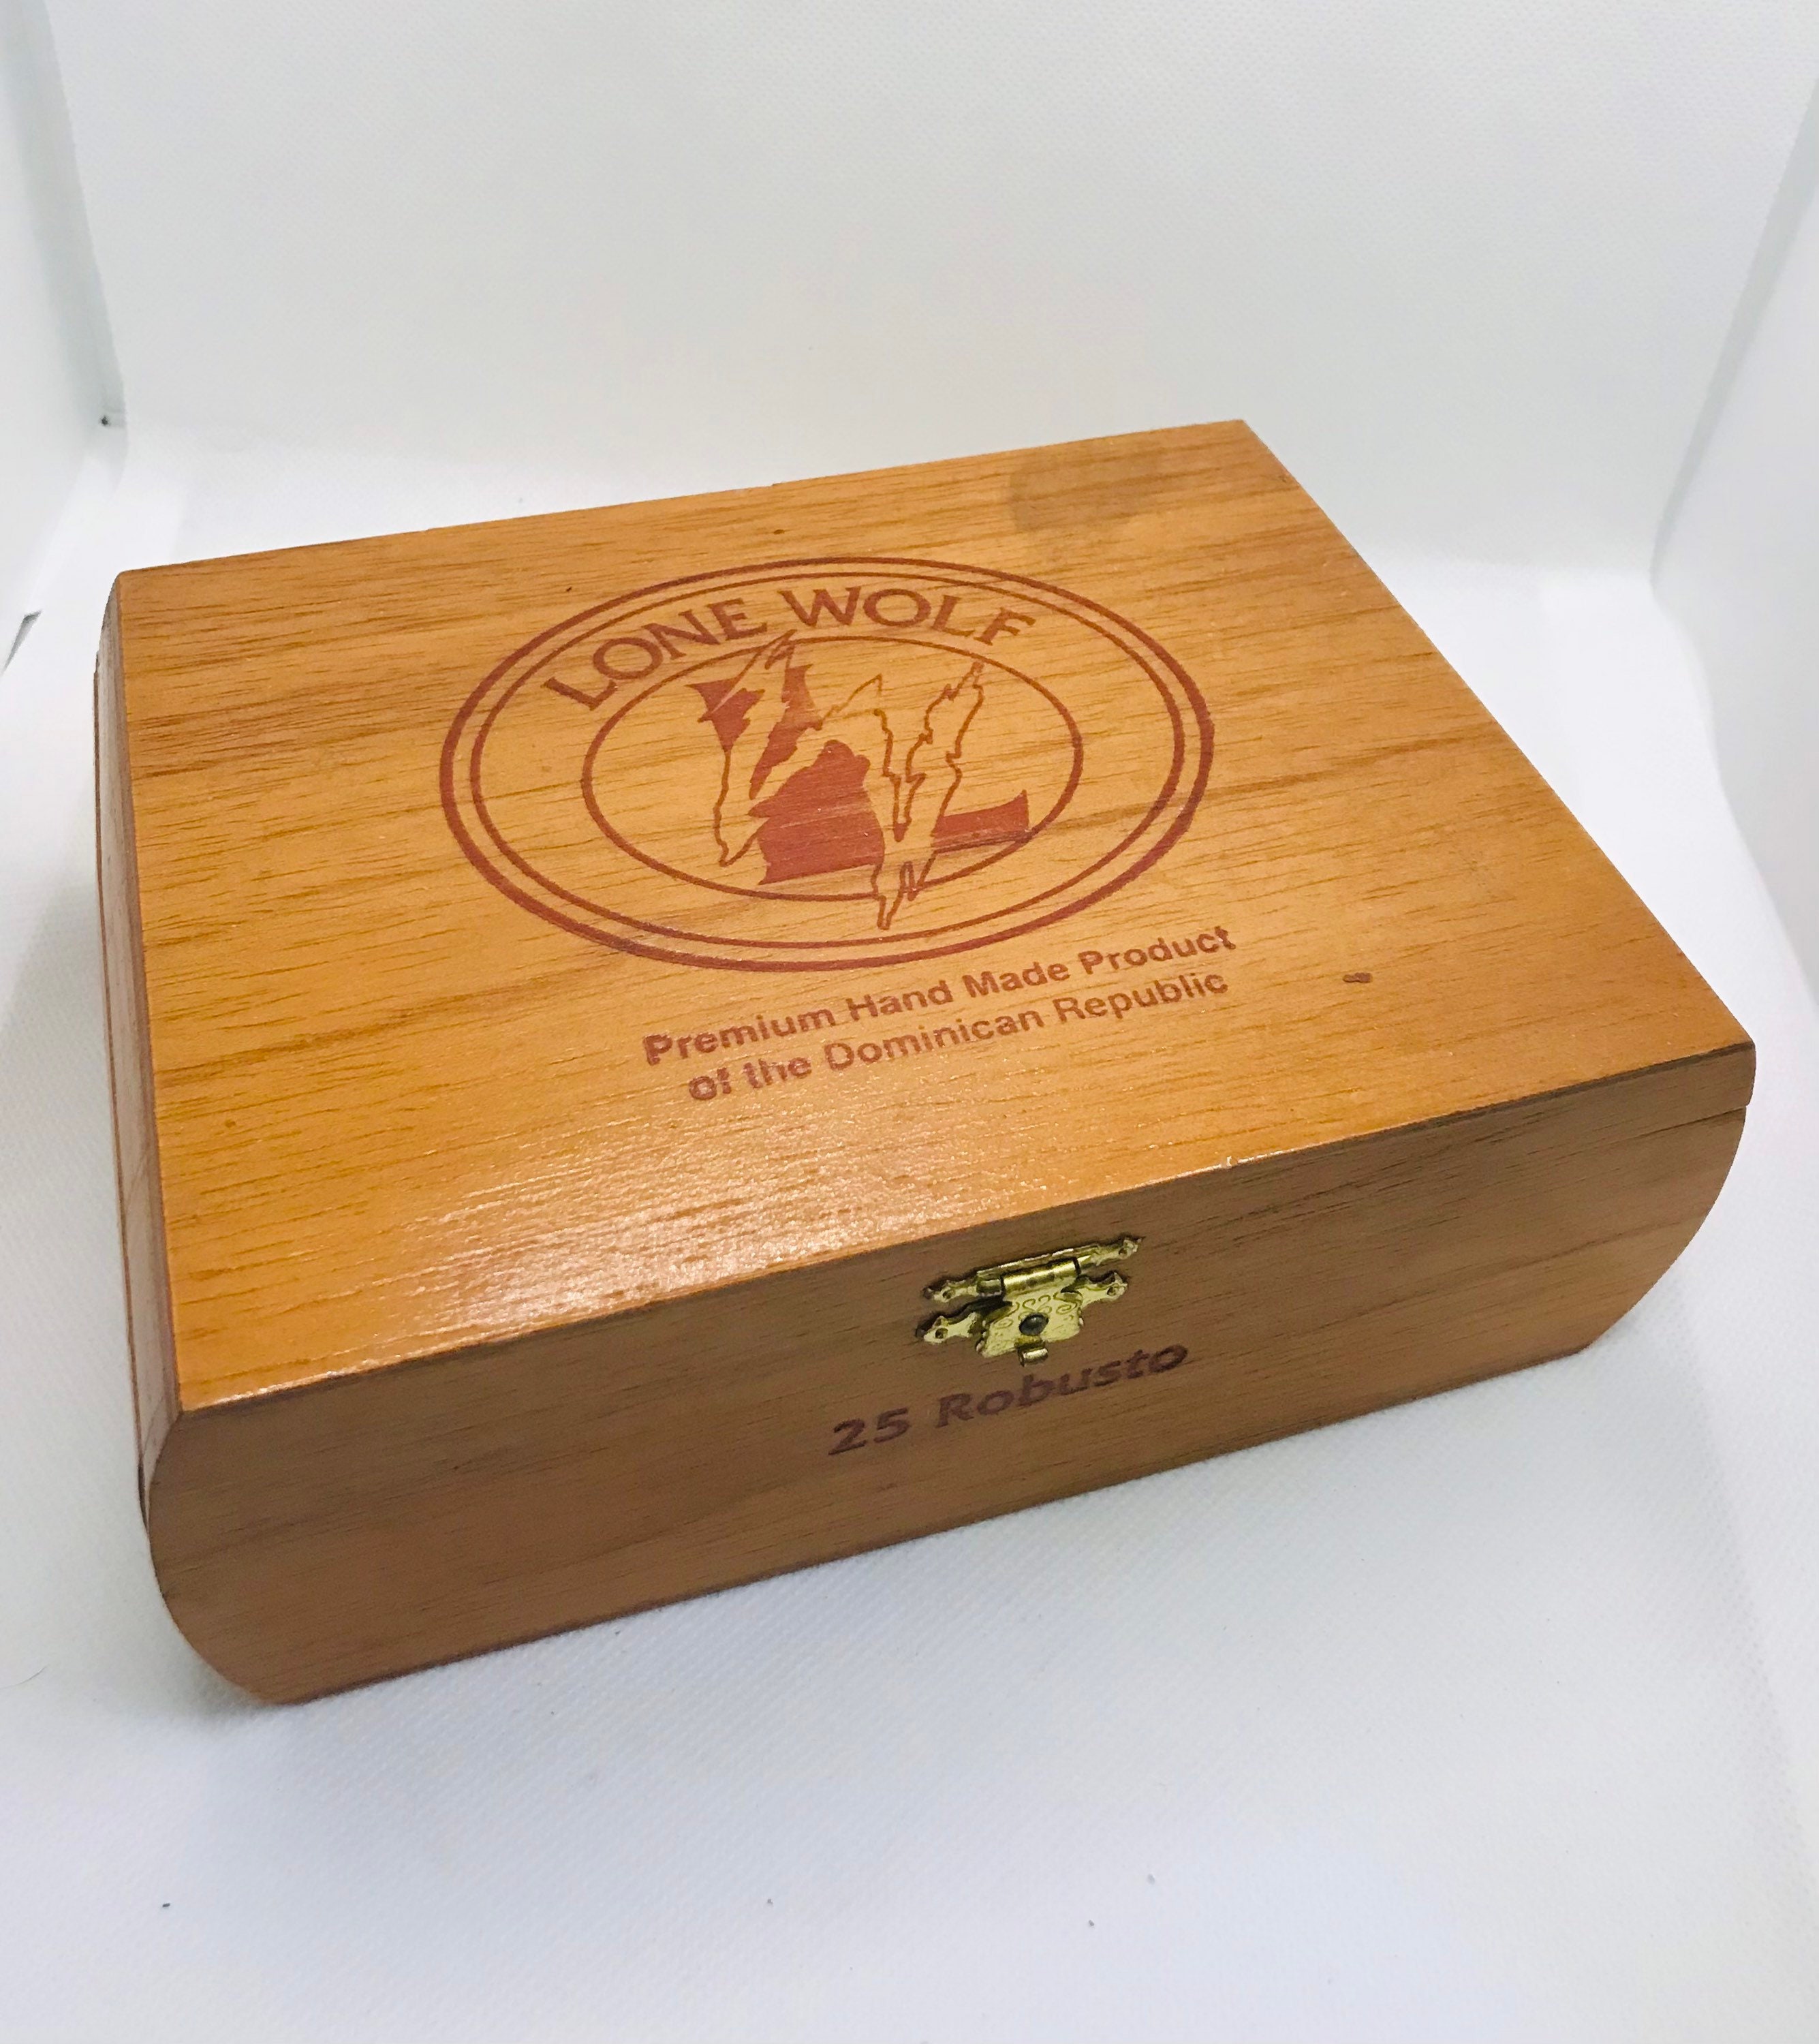 Fly Case Antique Wooden Case for Cigar Box Guitar Matteacci's -  Canada